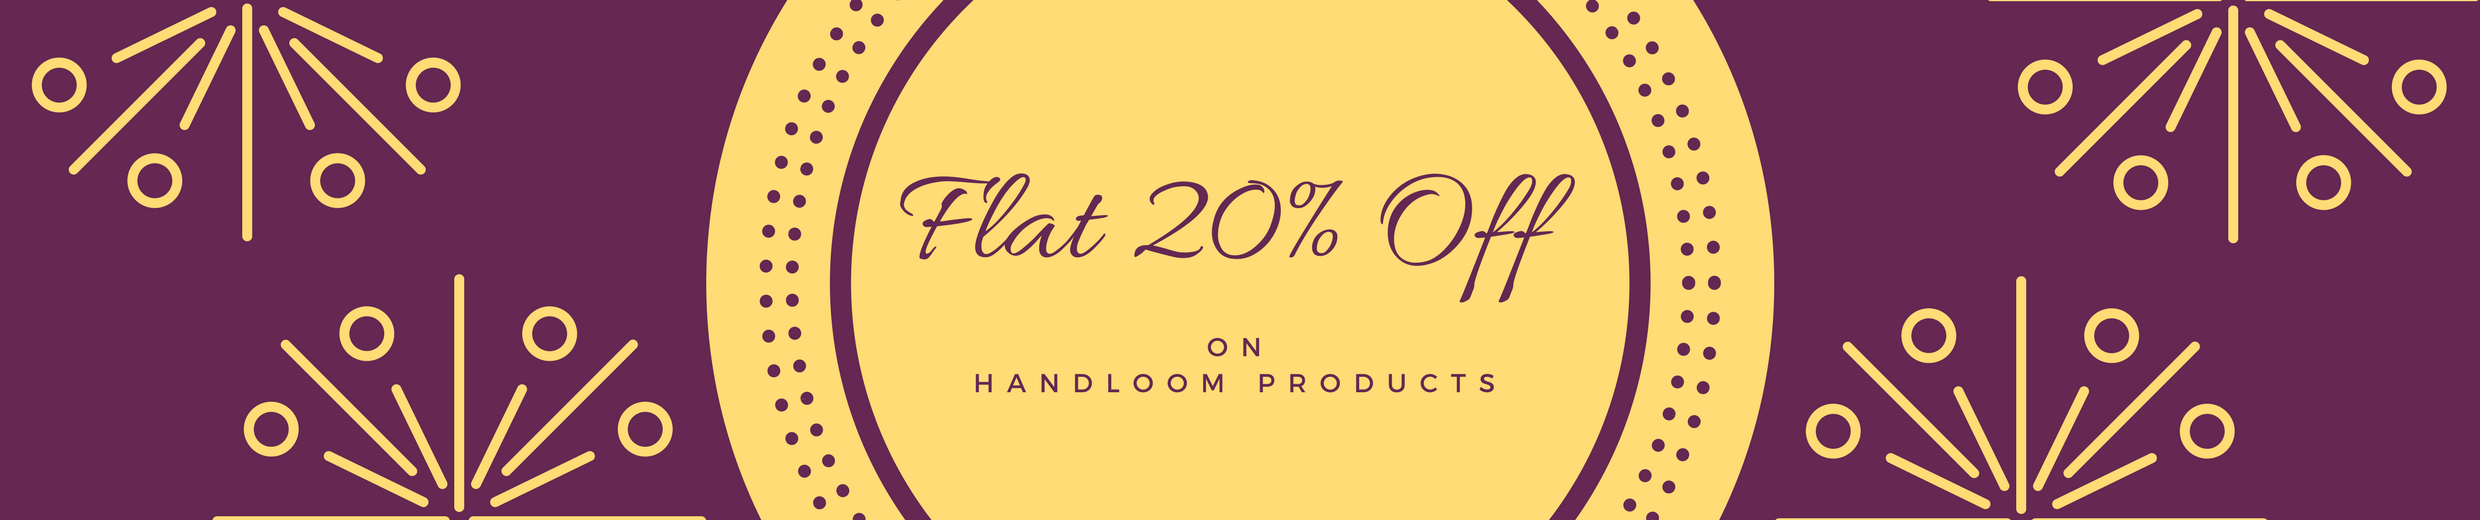 20% off on handloom products